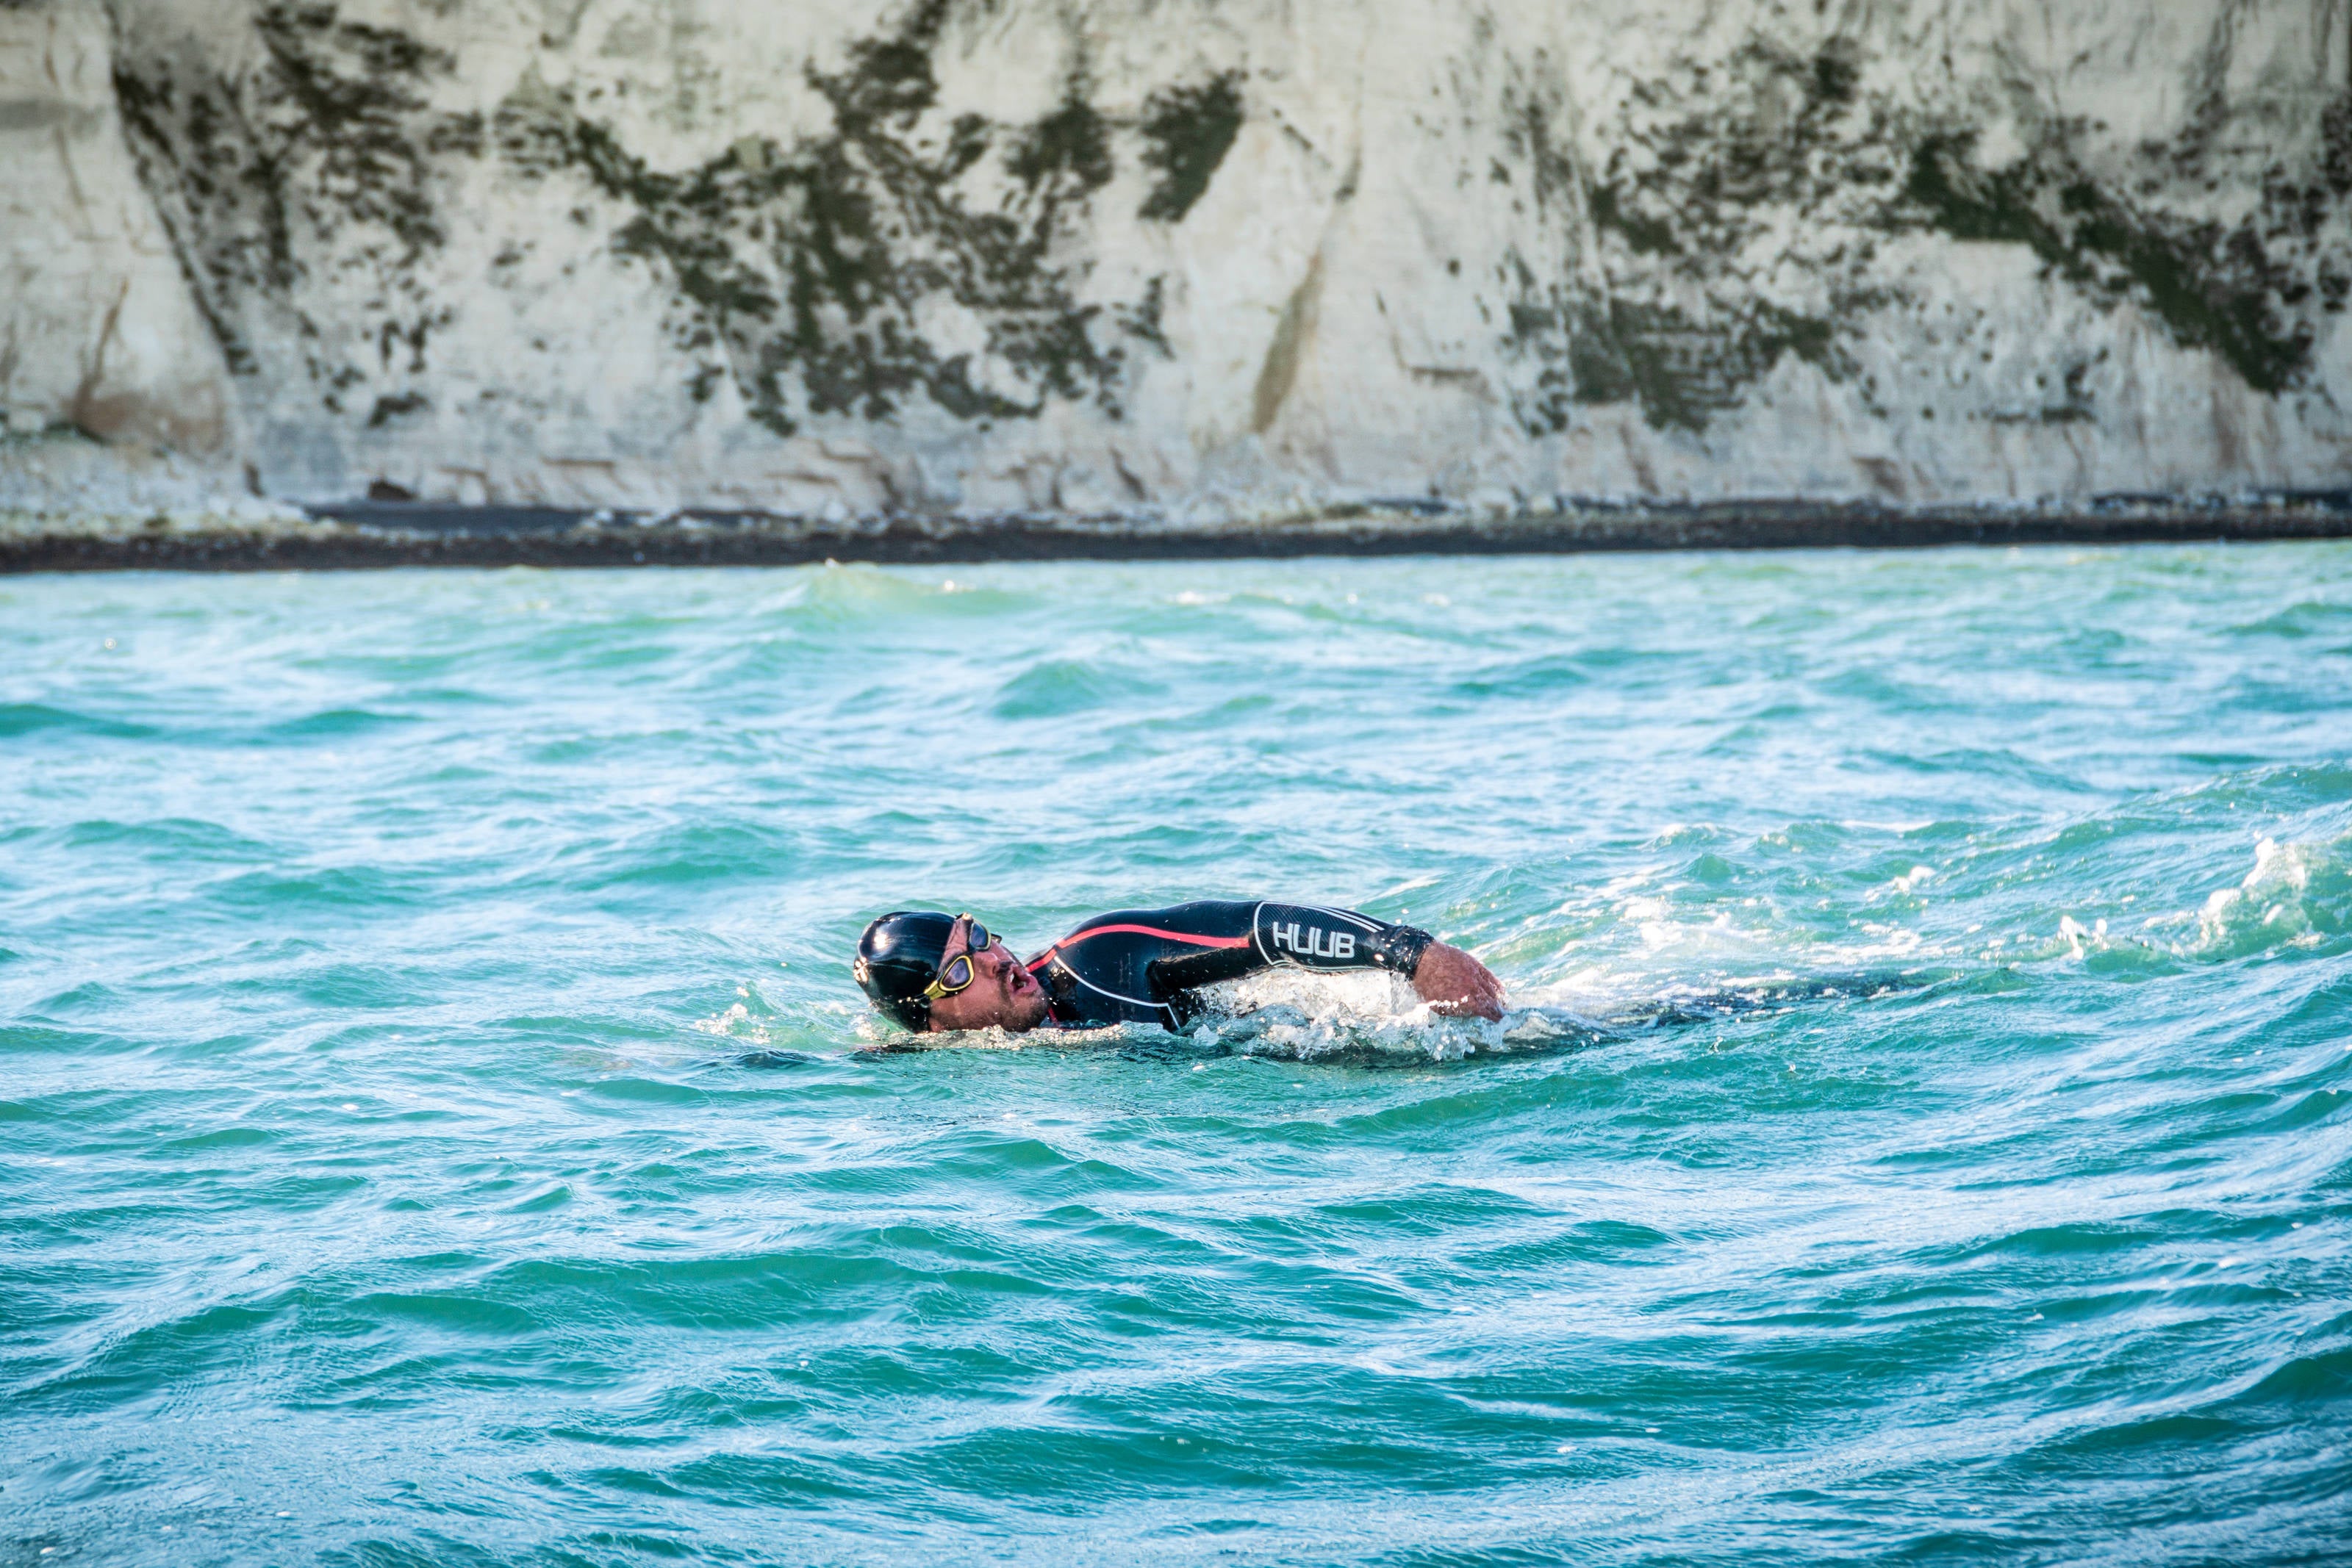 Ross Edgley: Great British Swim. Photo courtesy of Red Bull Media Pool